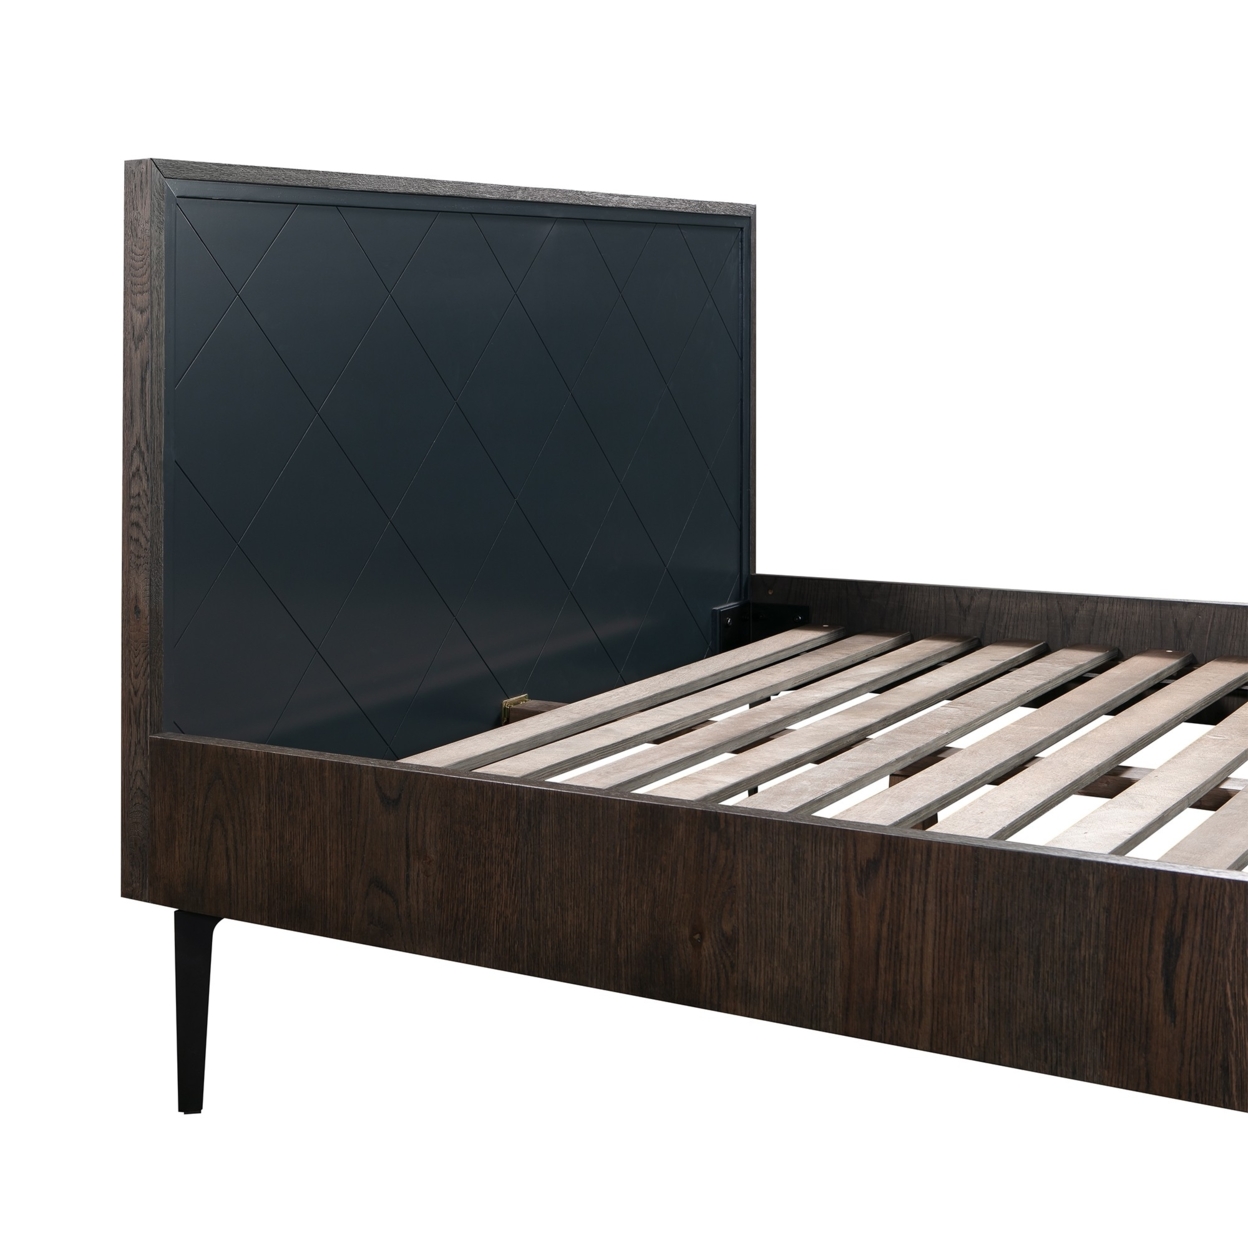 Cross Design Wooden Queen Size Bed With Sleek Tubular Legs, Gray And Brown- Saltoro Sherpi